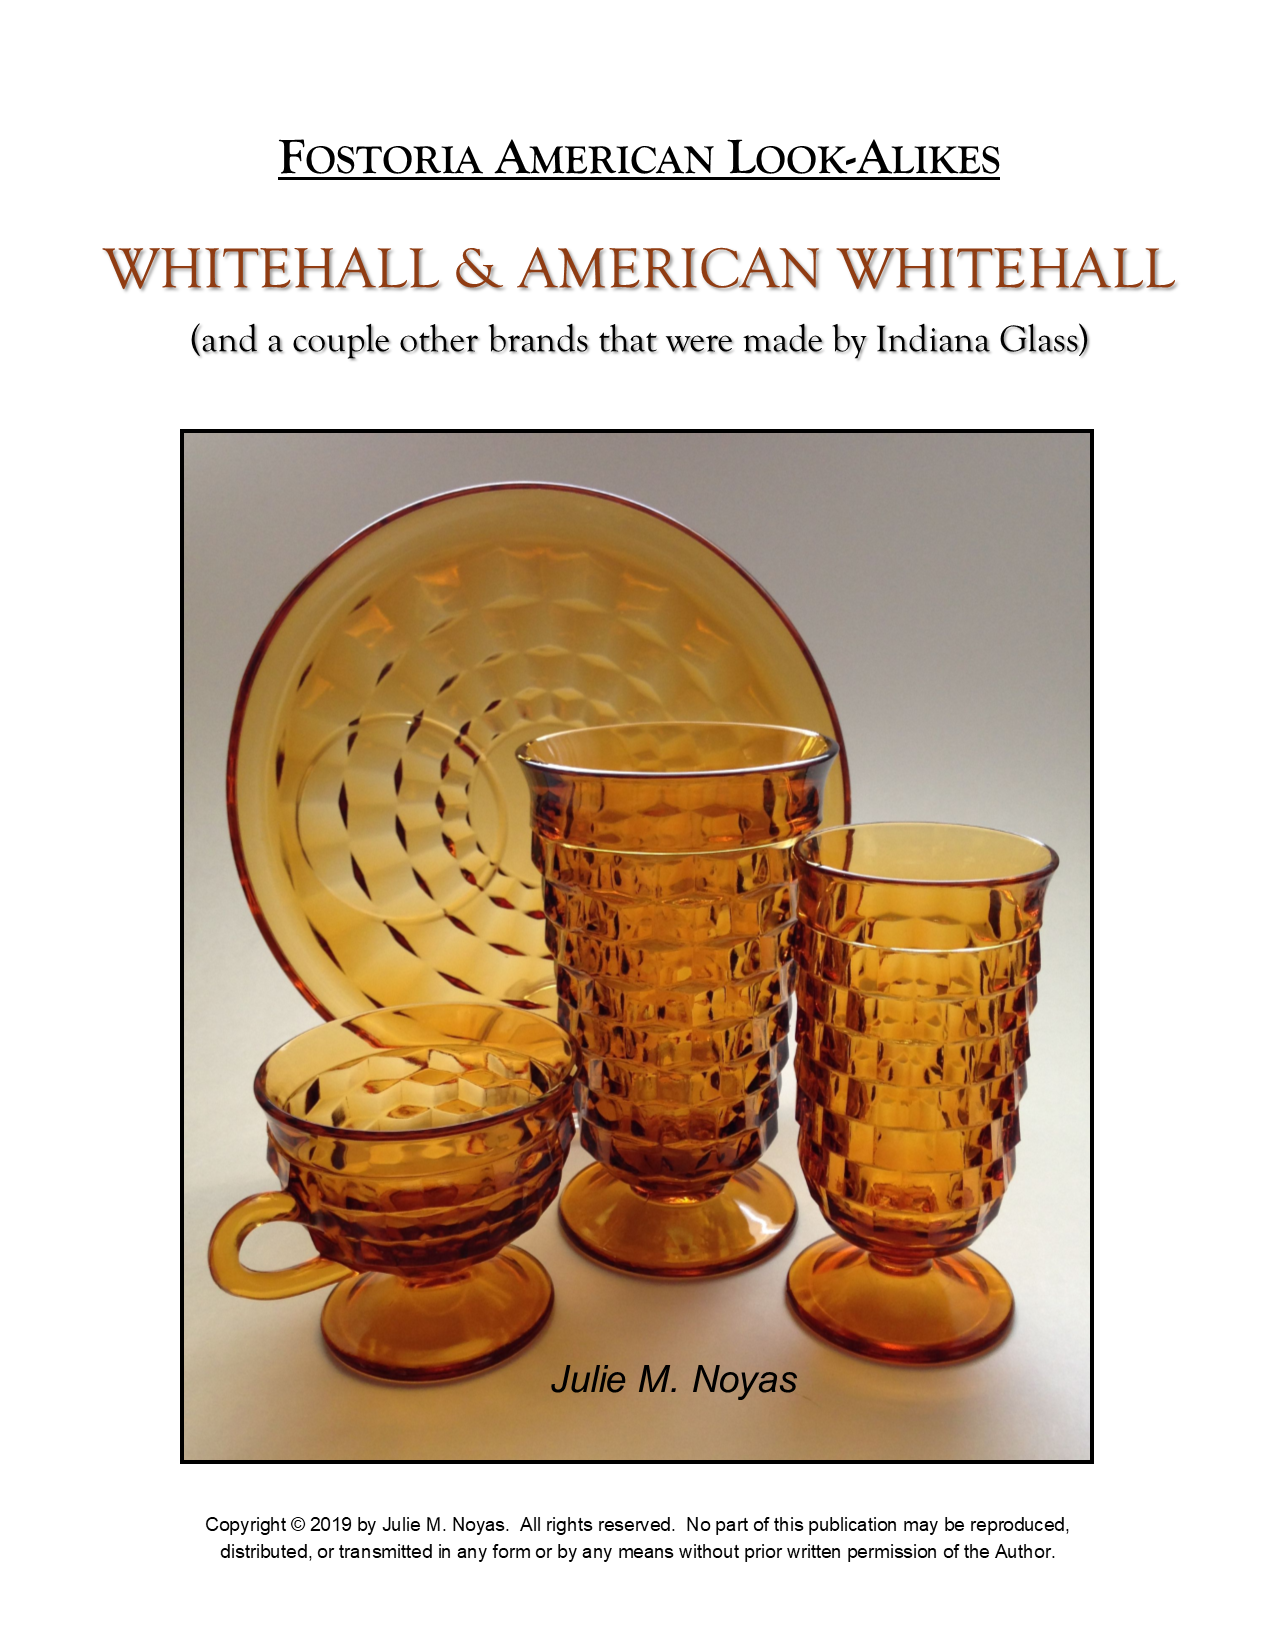 Whitehall & American Whitehall Report